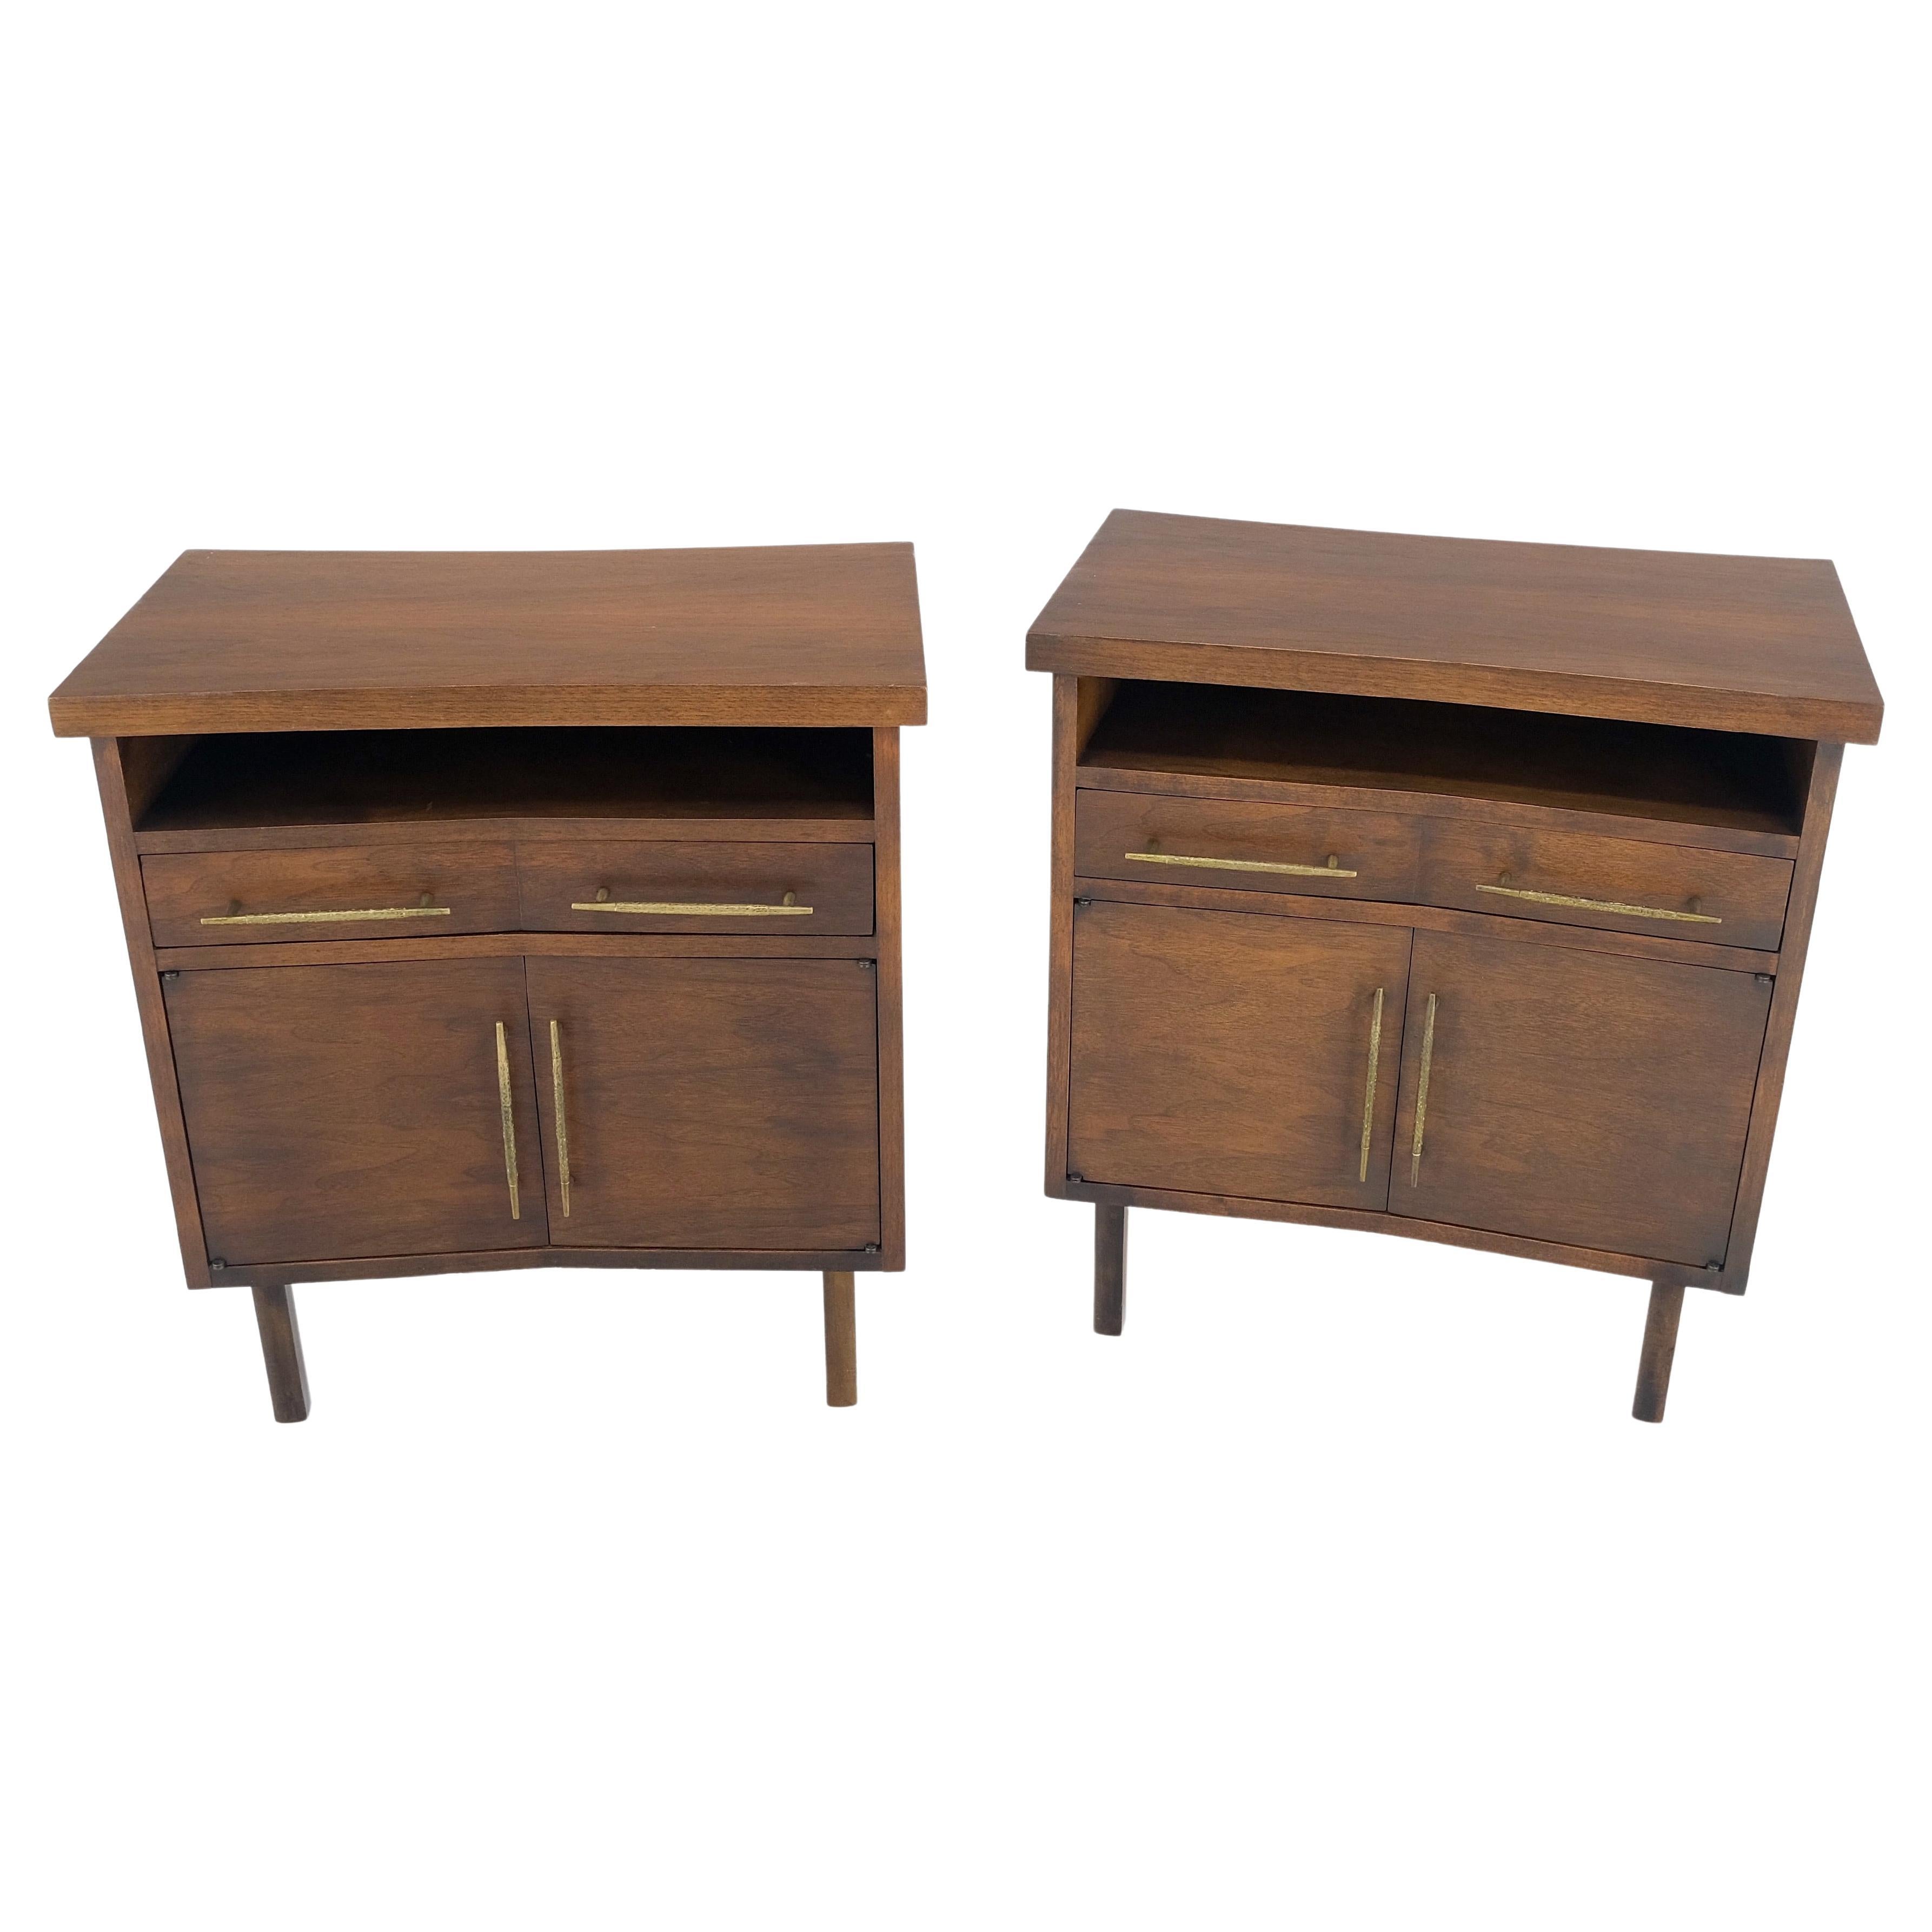 Pair of Walnut Solid Brass Pulls Mid-Century Modern Nightstands Cabinets MINT!